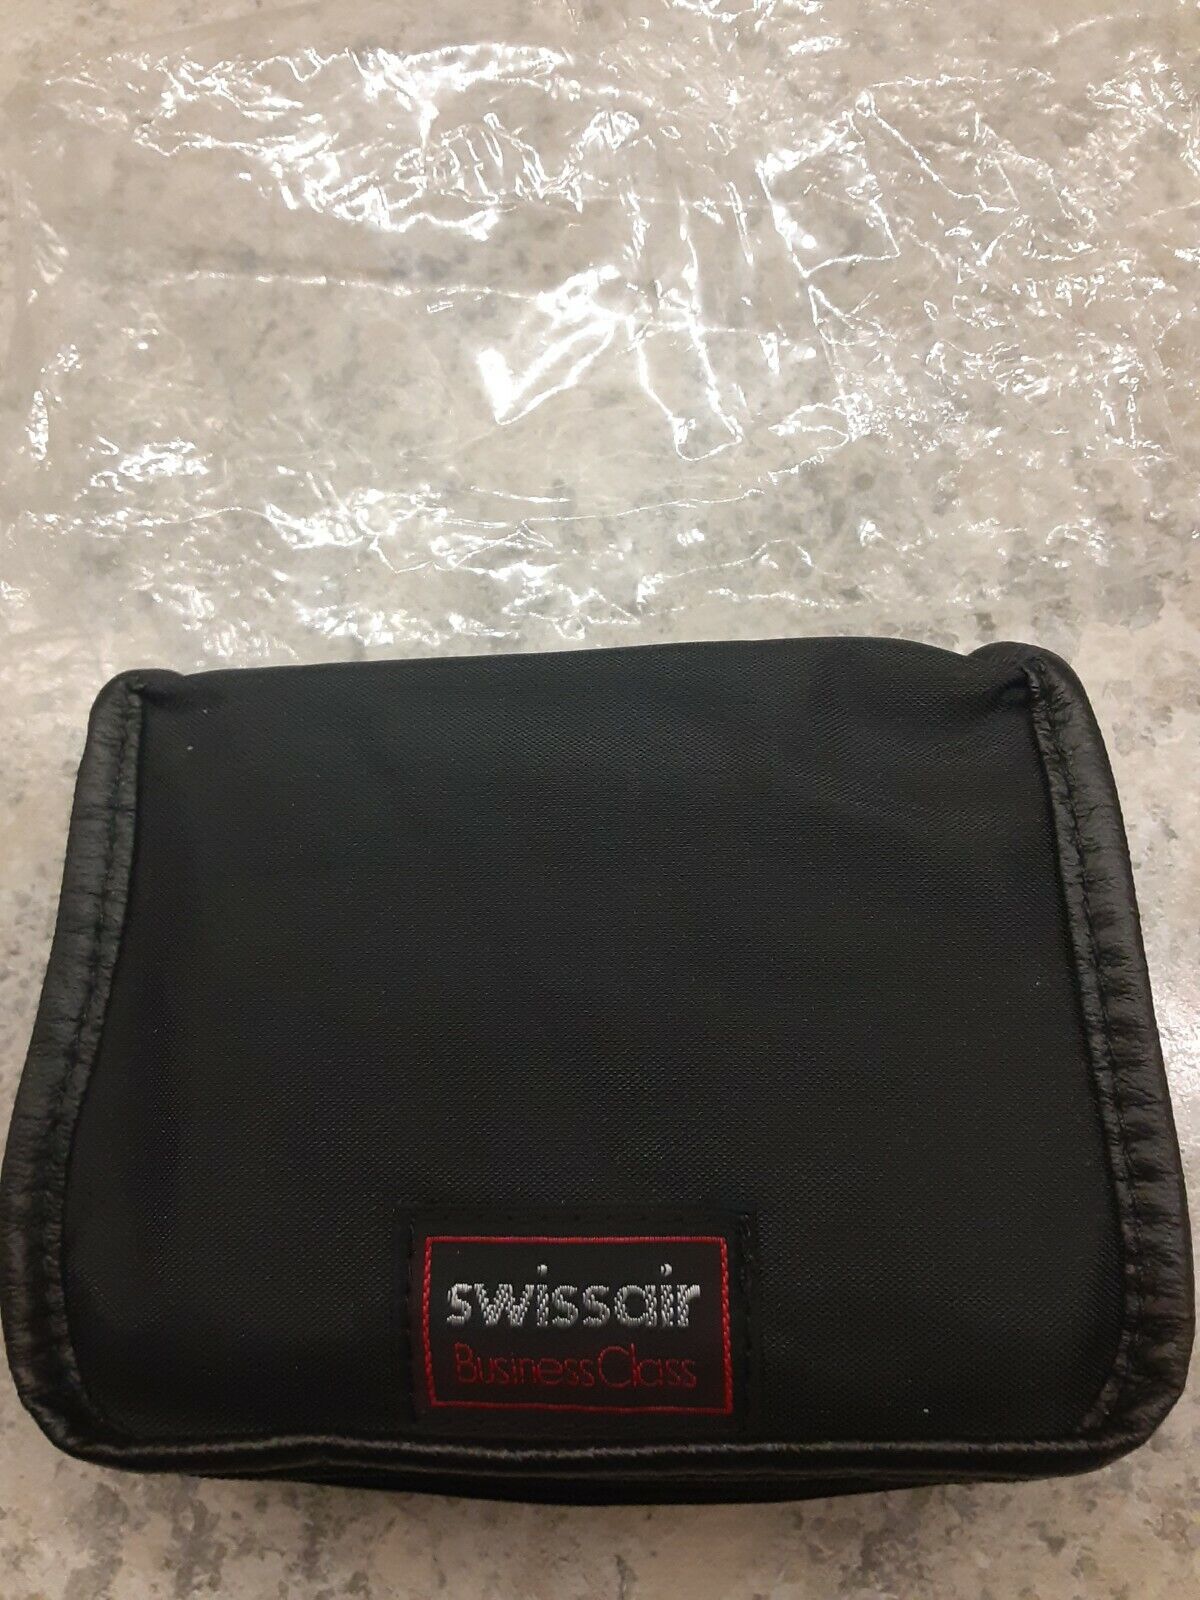 Swissair Business Class Travel Kit New Vintage